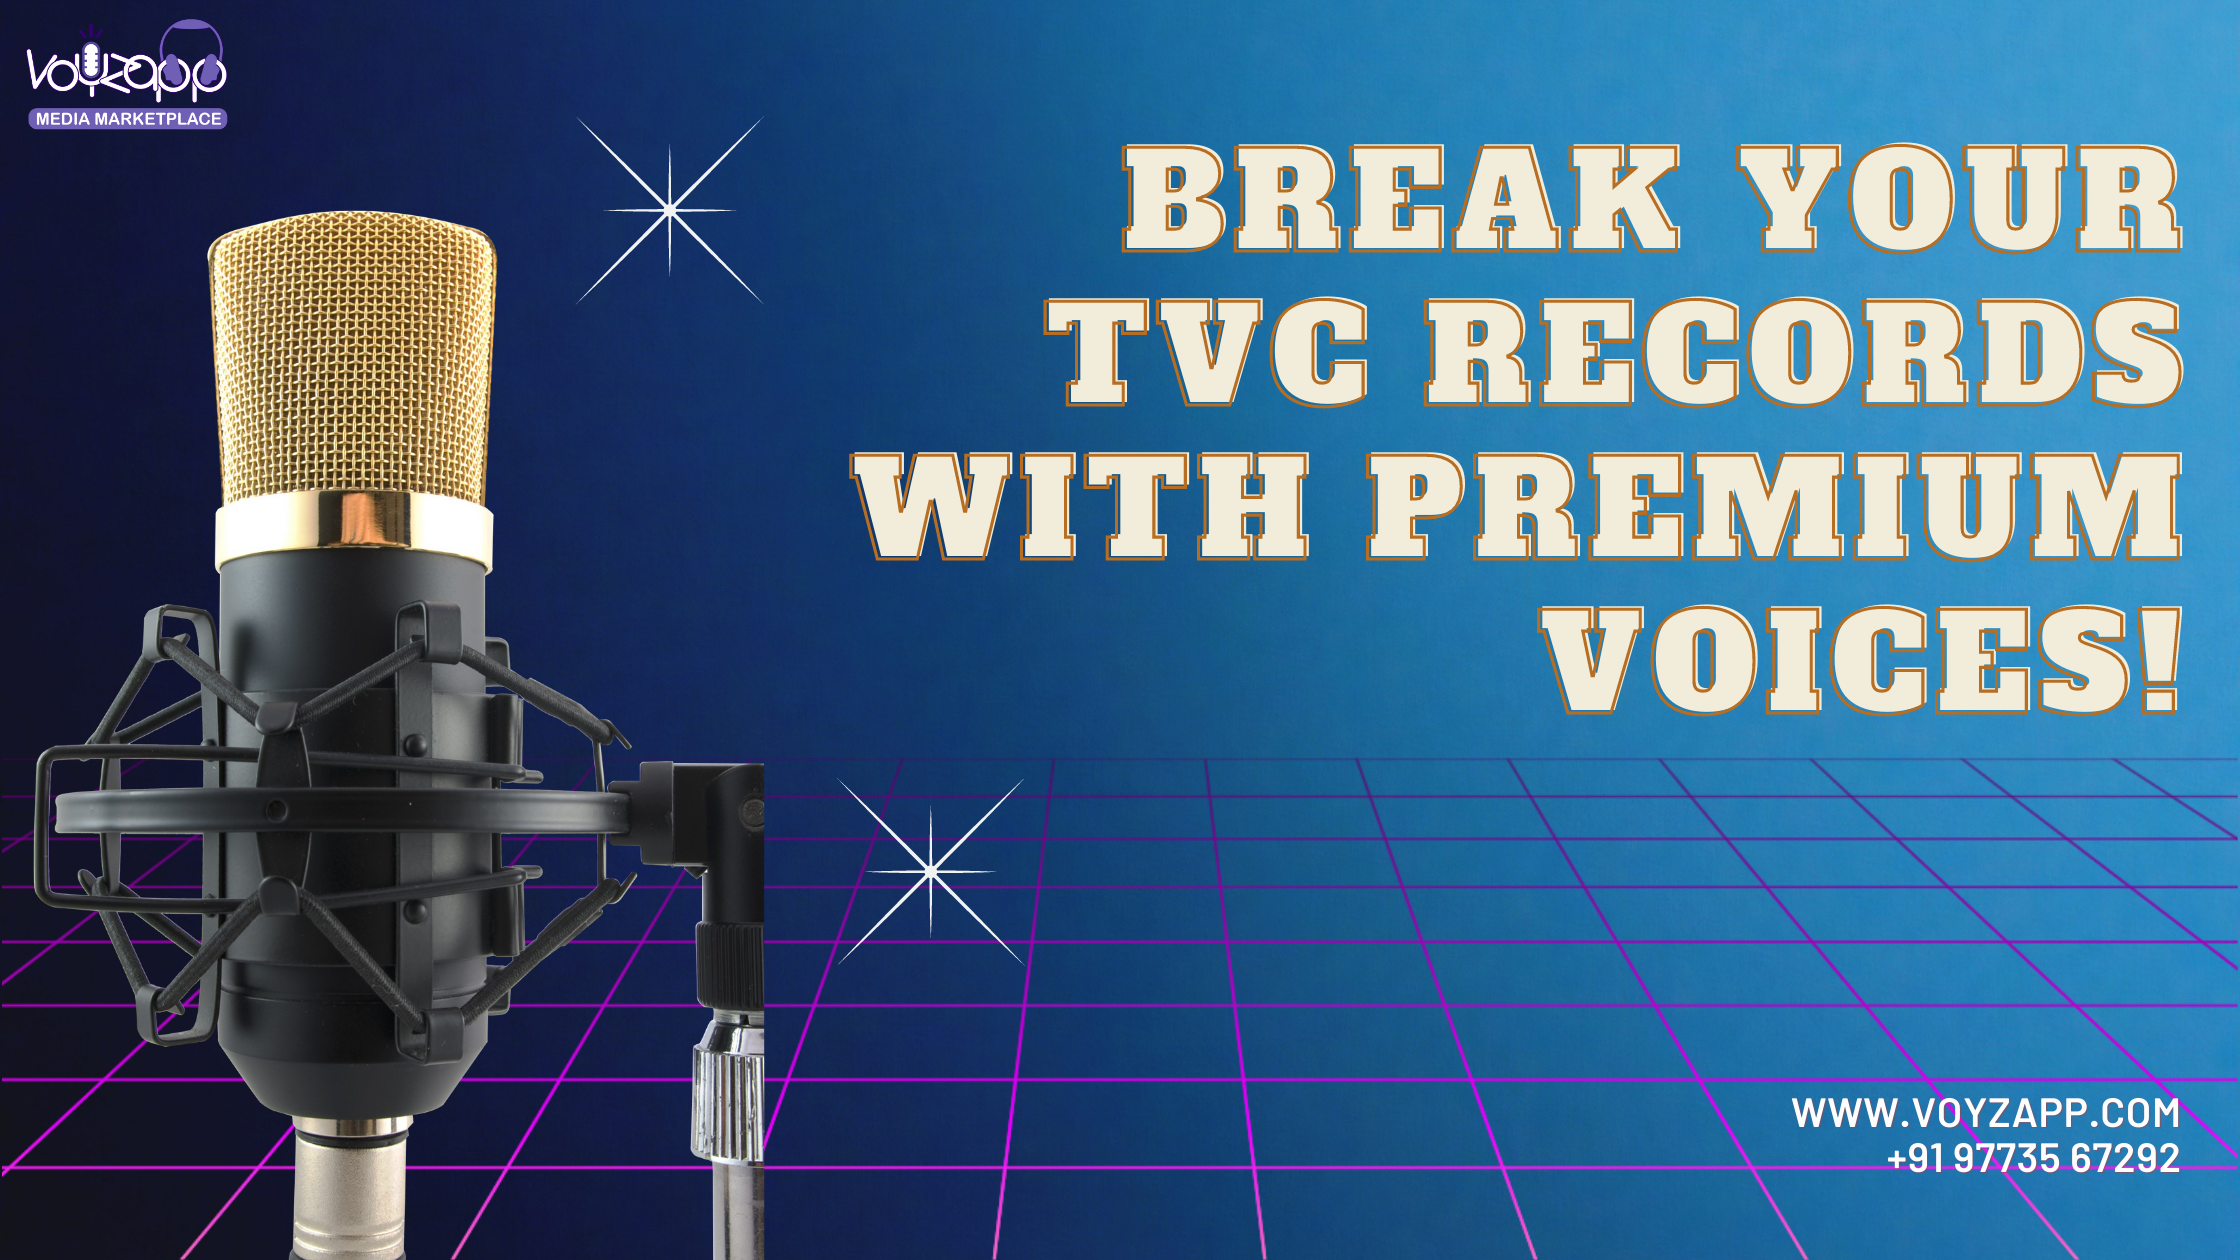 Break your TVC records with Premium Voices!